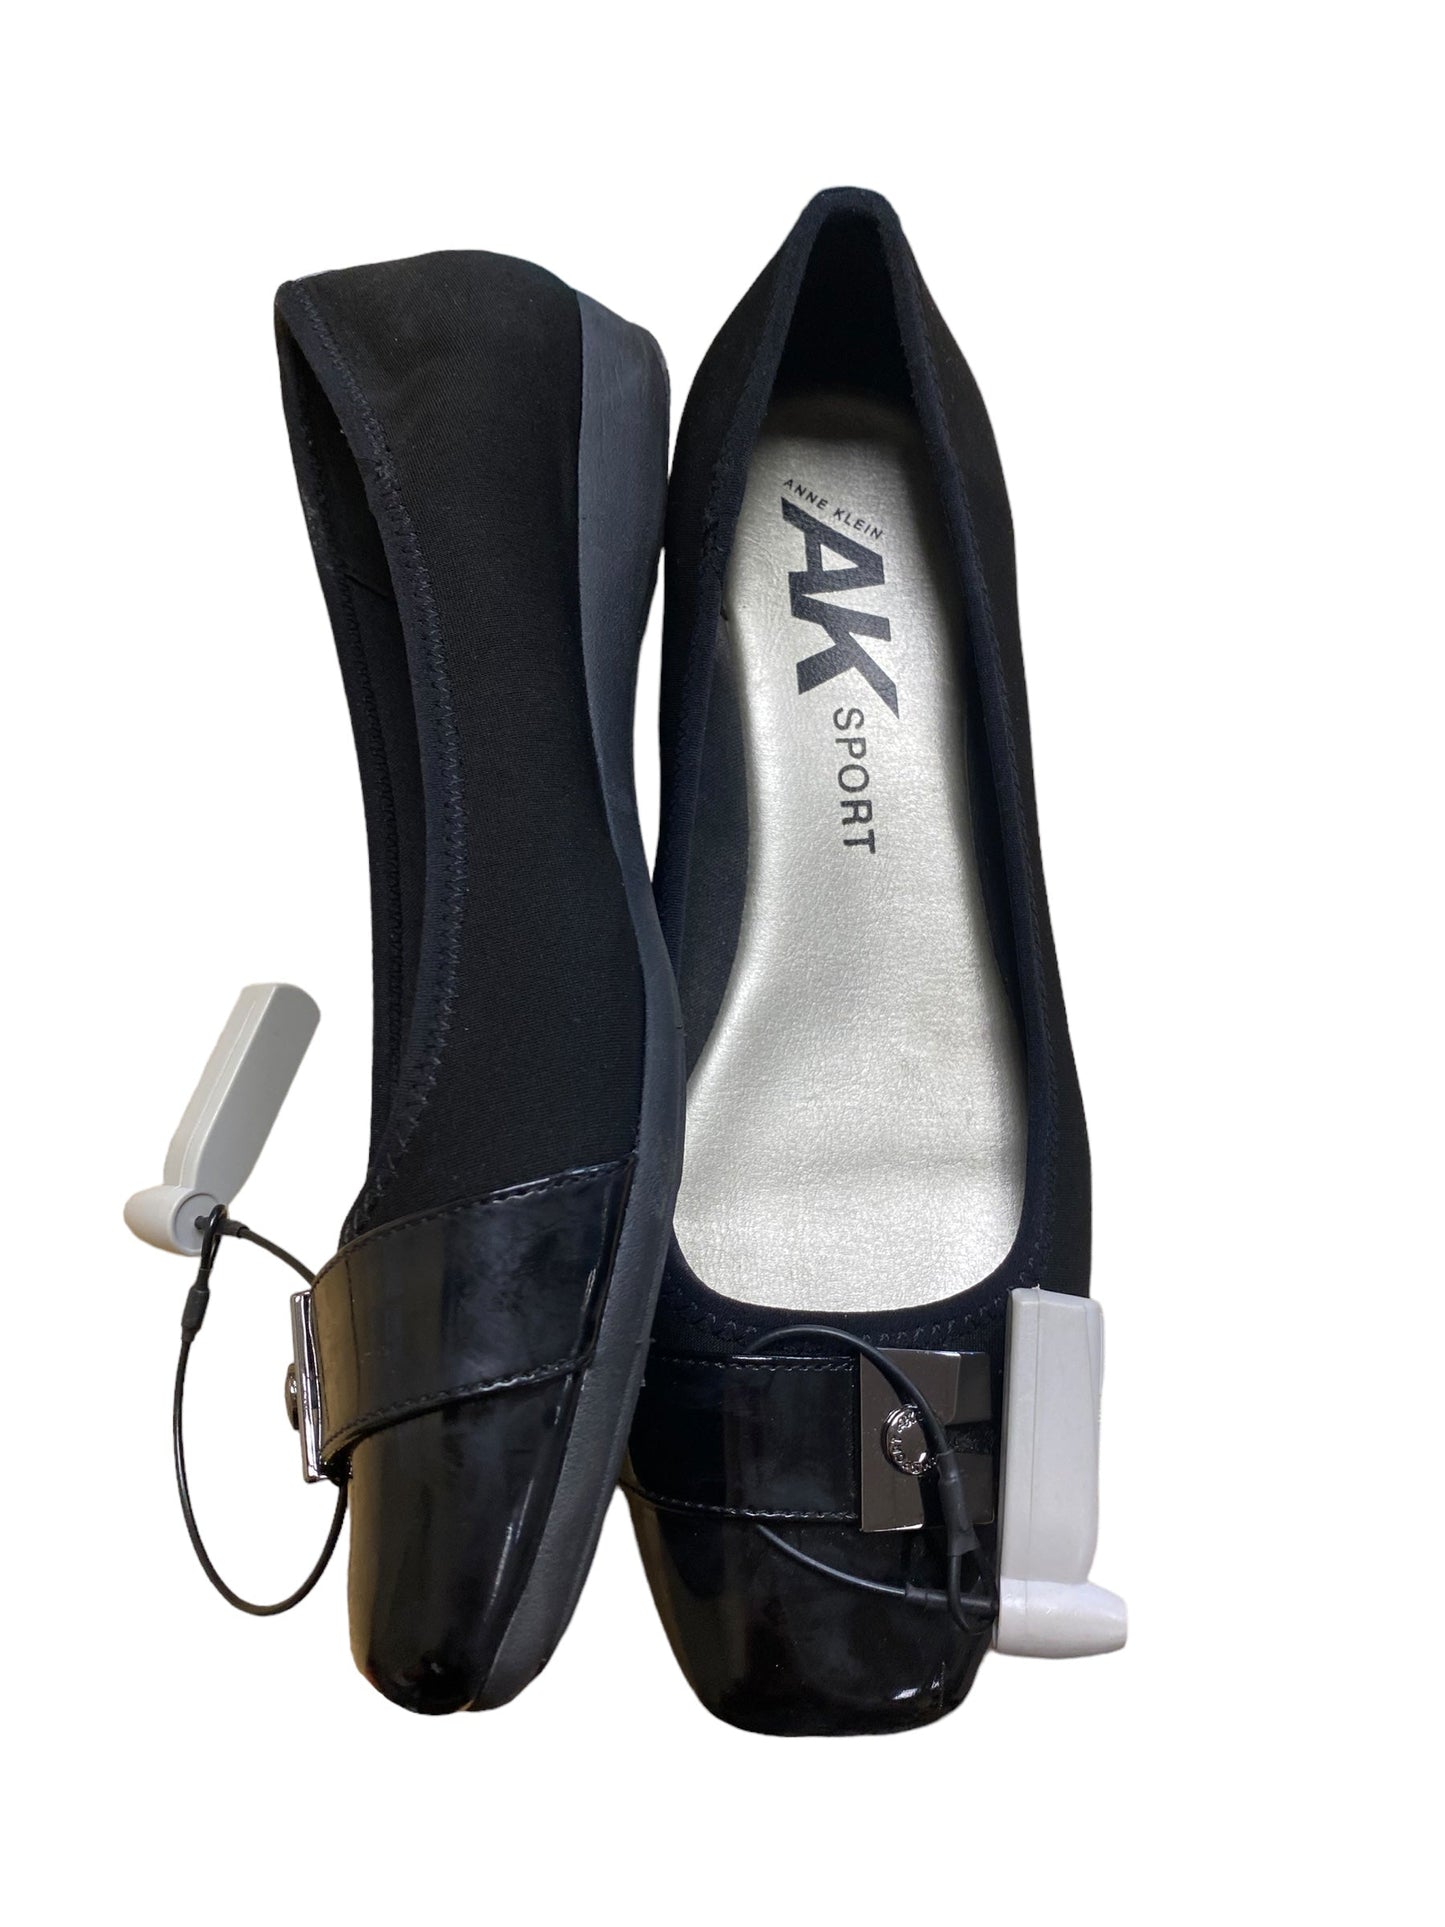 Black Shoes Flats Anne Klein, Size 9.5